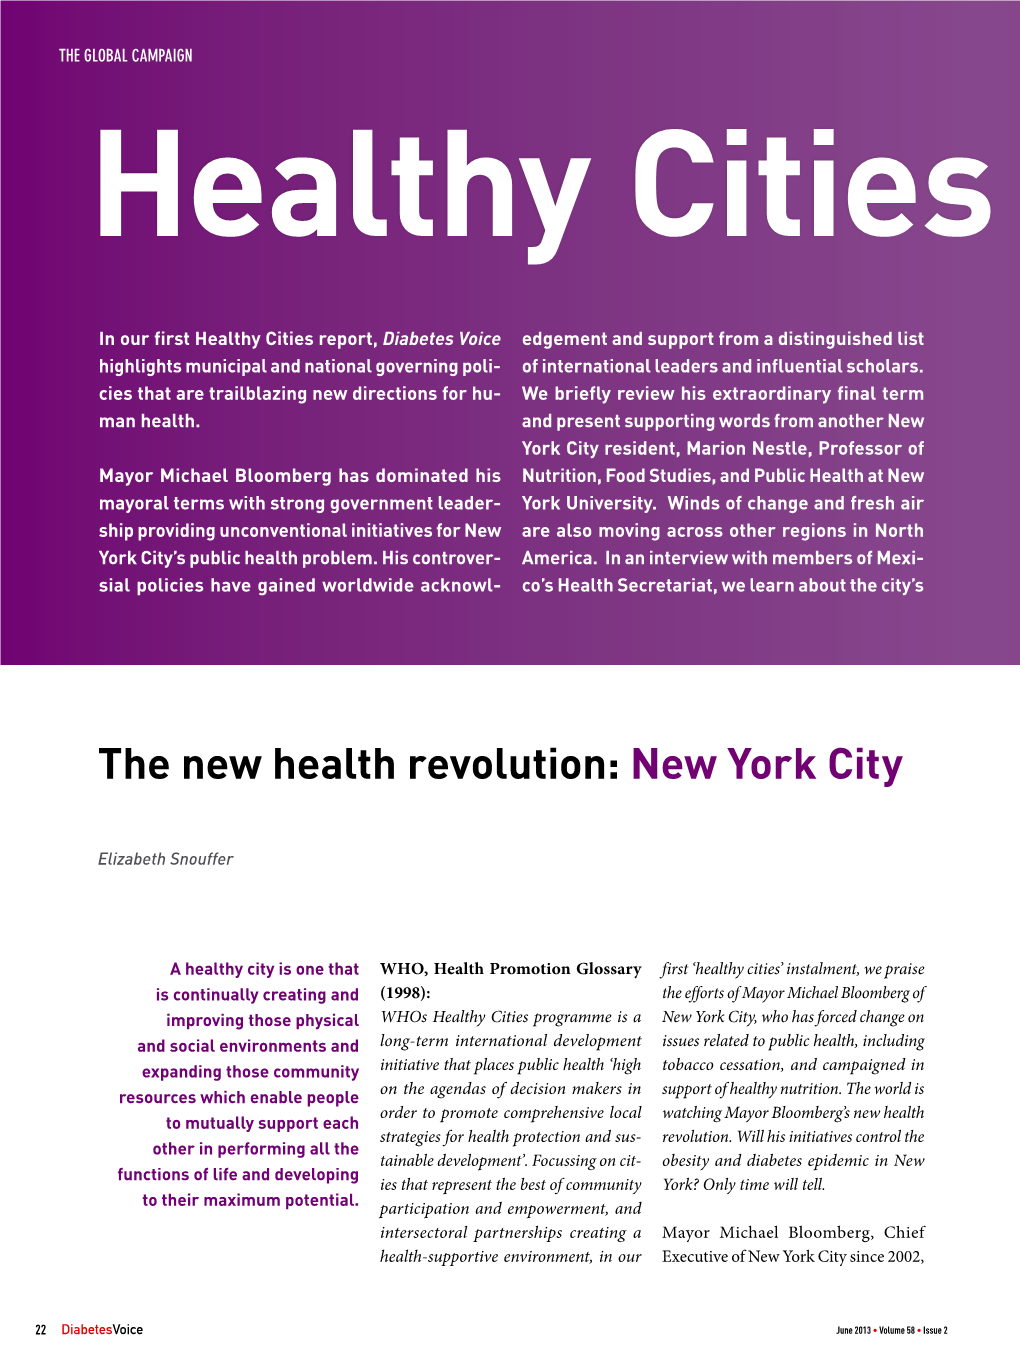 The New Health Revolution: New York City